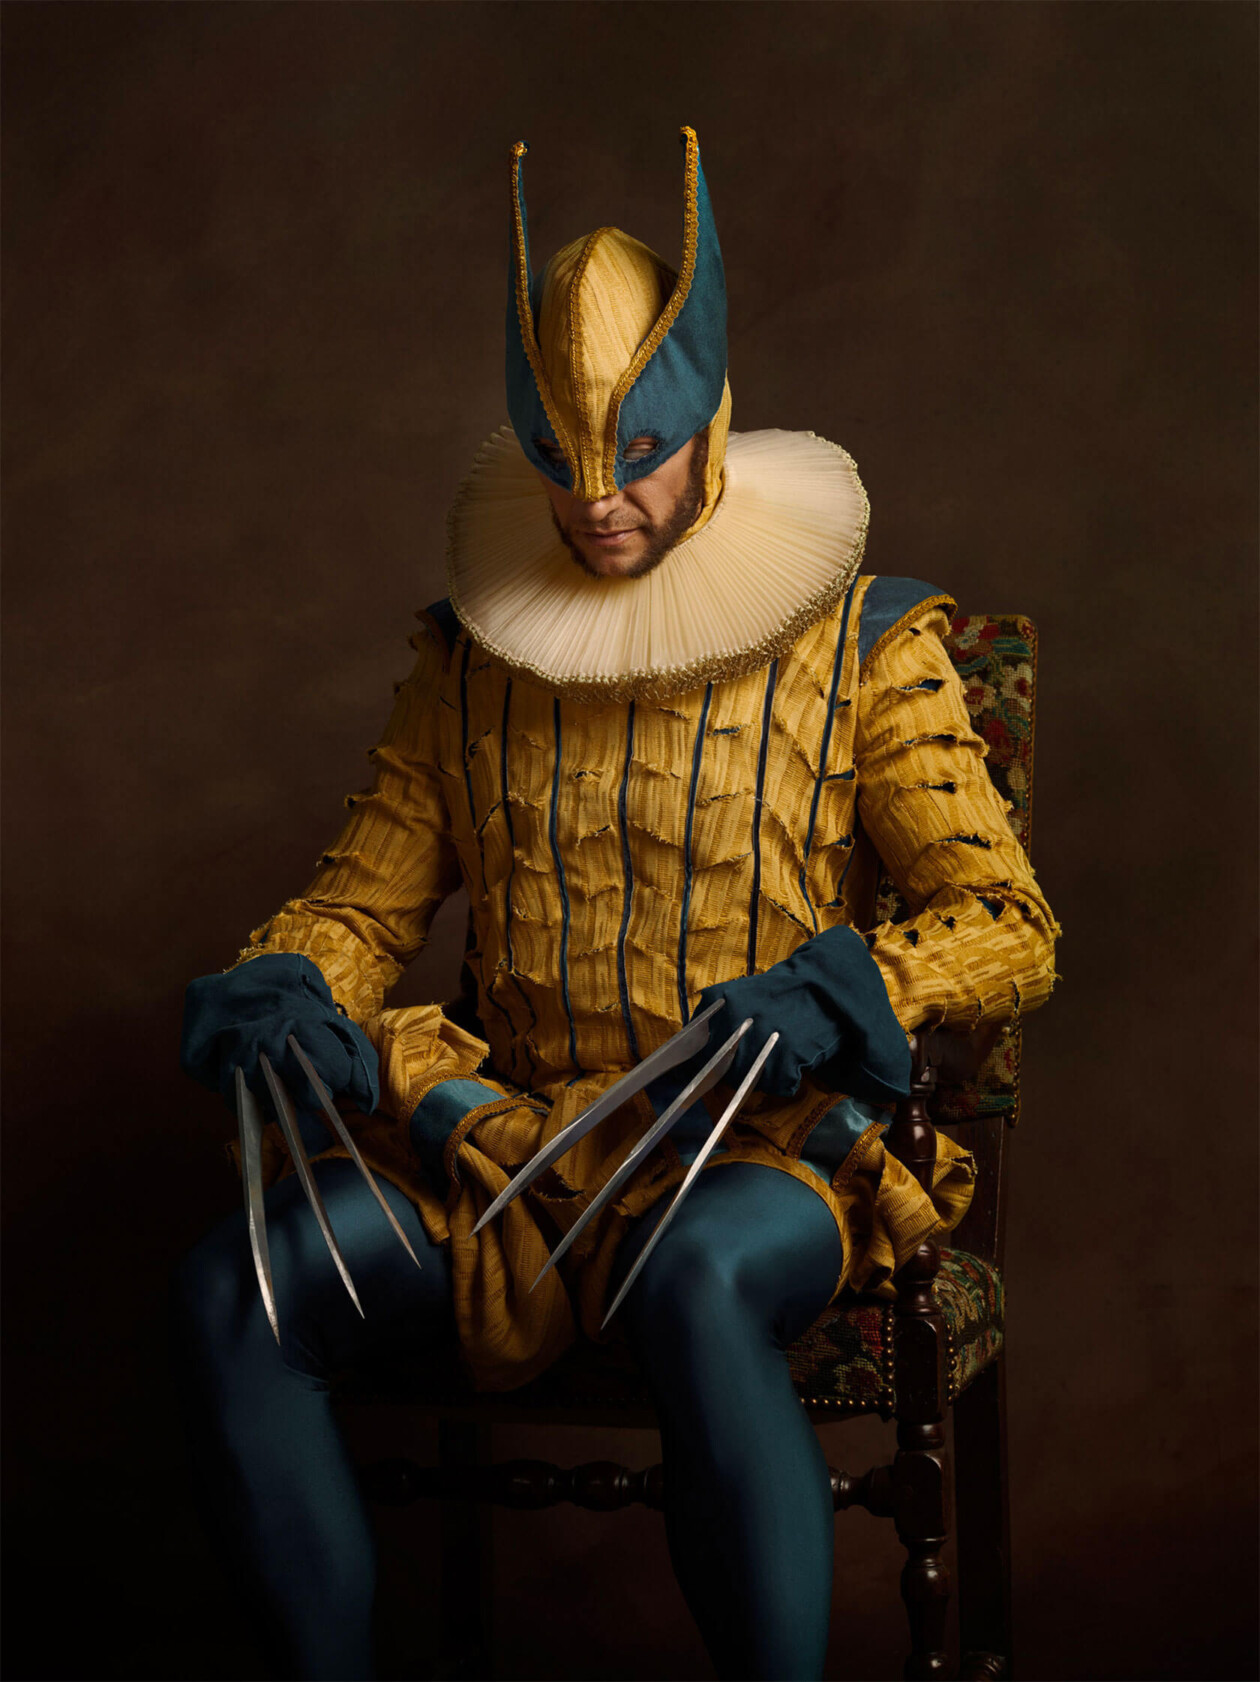 Flemish Superheroes, A Creative Portrait Series By Sacha Goldberger (7)